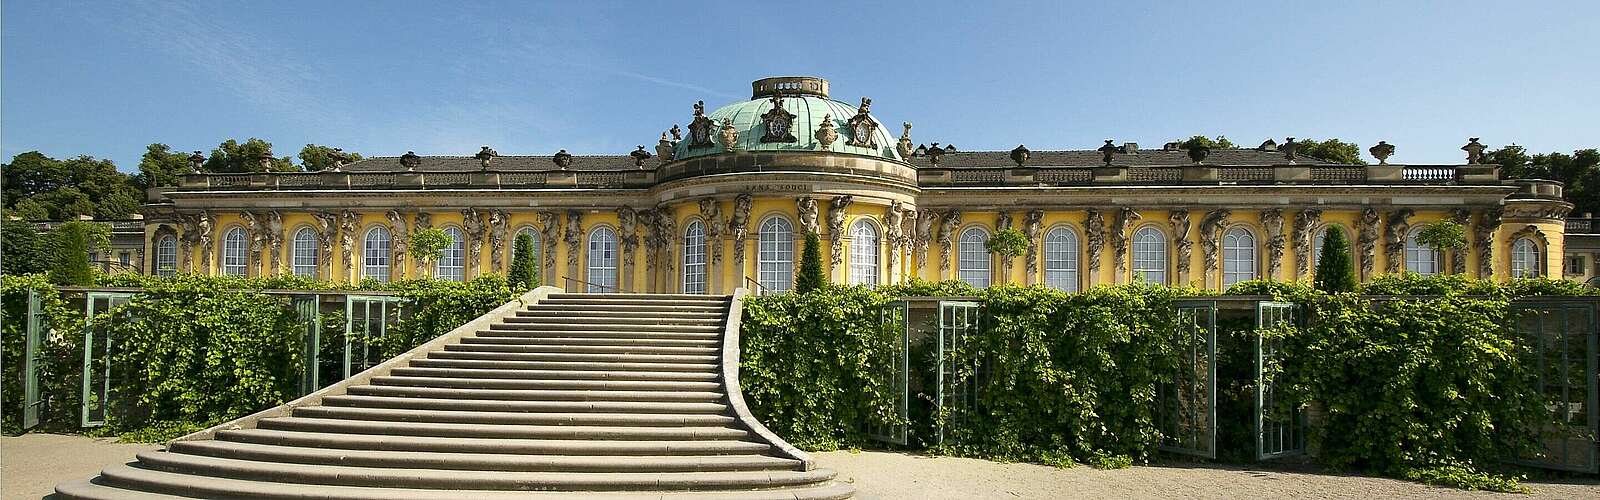 Schloss Sanssouci,
        
    

        Picture: TMB Tourismus-Marketing Brandenburg GmbH und SPSG/Leo Seidel